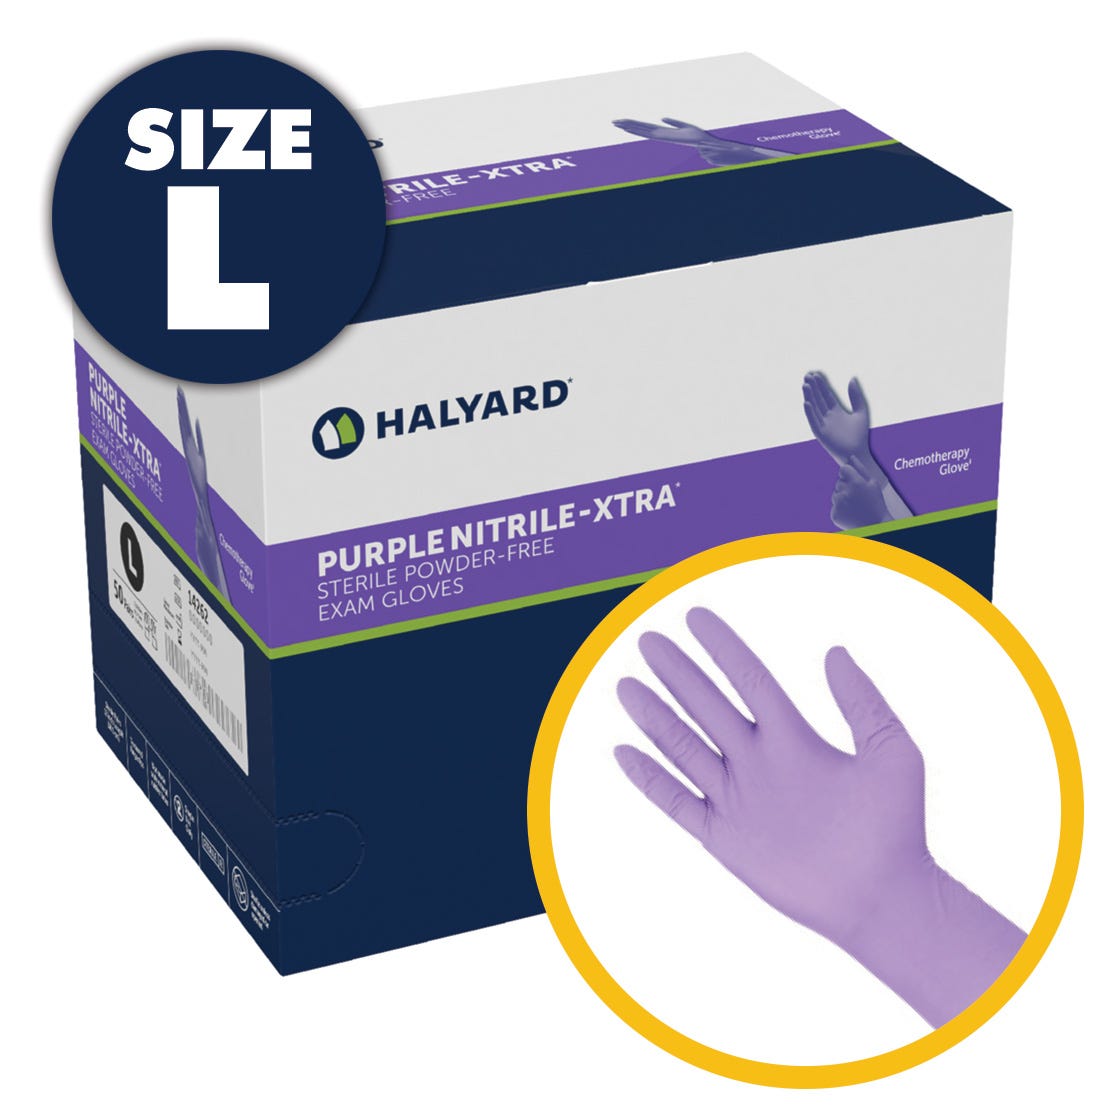 Purple Nitrile-XTRA Sterile Exam Gloves, Large, Powder Free, Latex Free, 50prs/Box